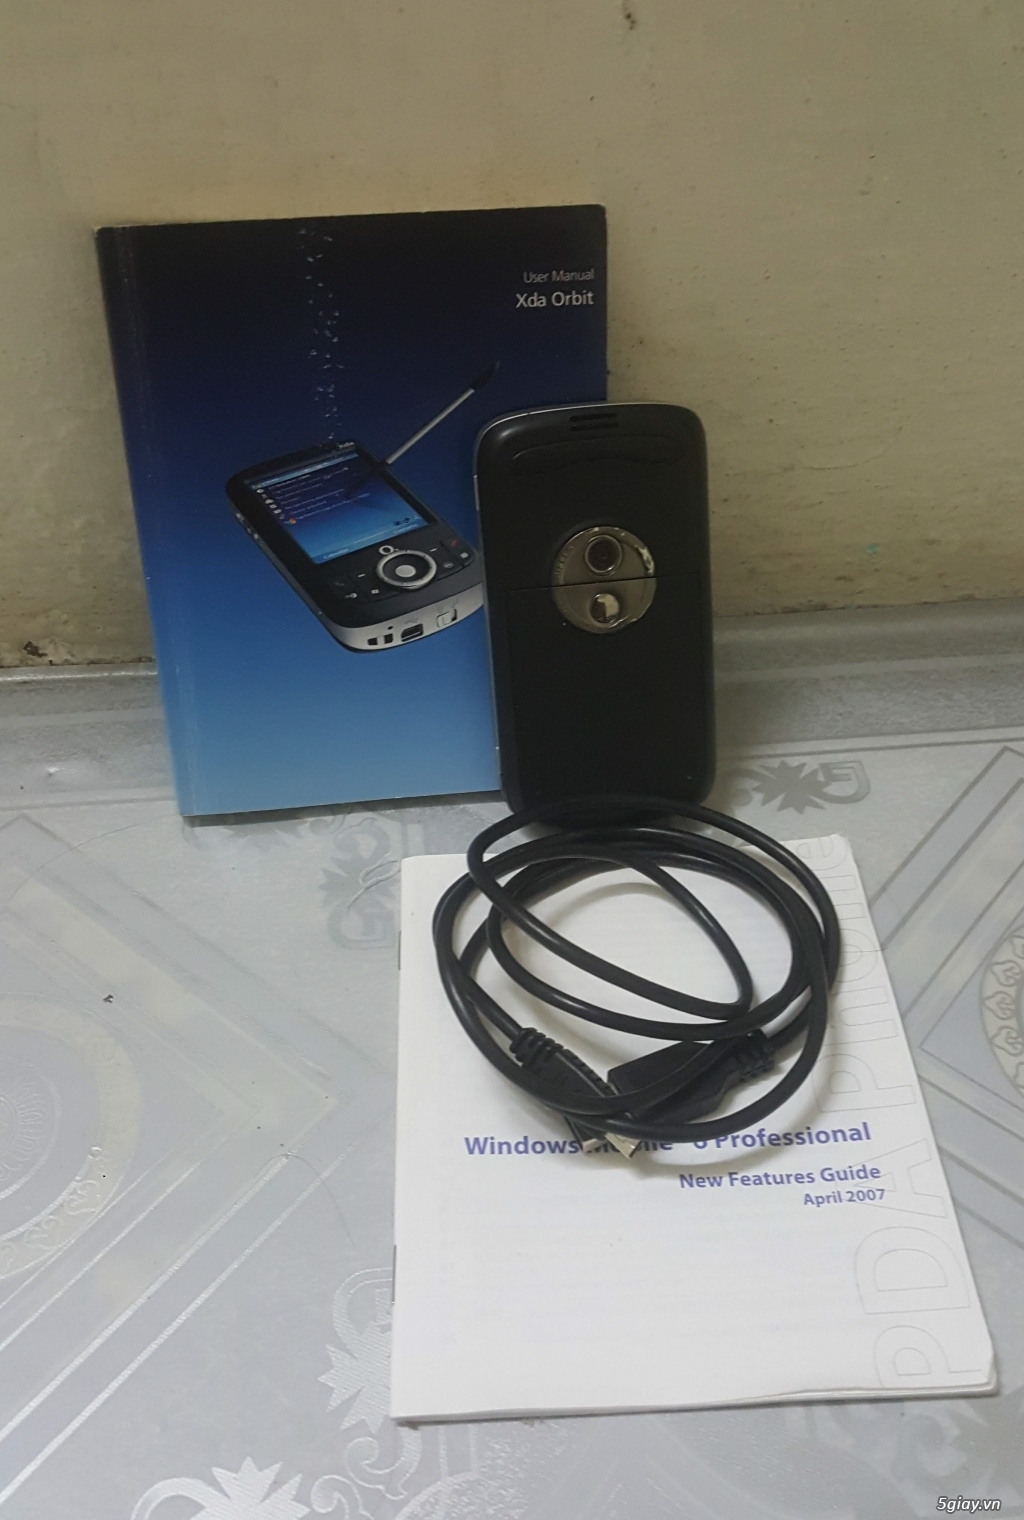 O2 Exec, O2 Orbit, HTC HD mini, Nokia N900 - 1